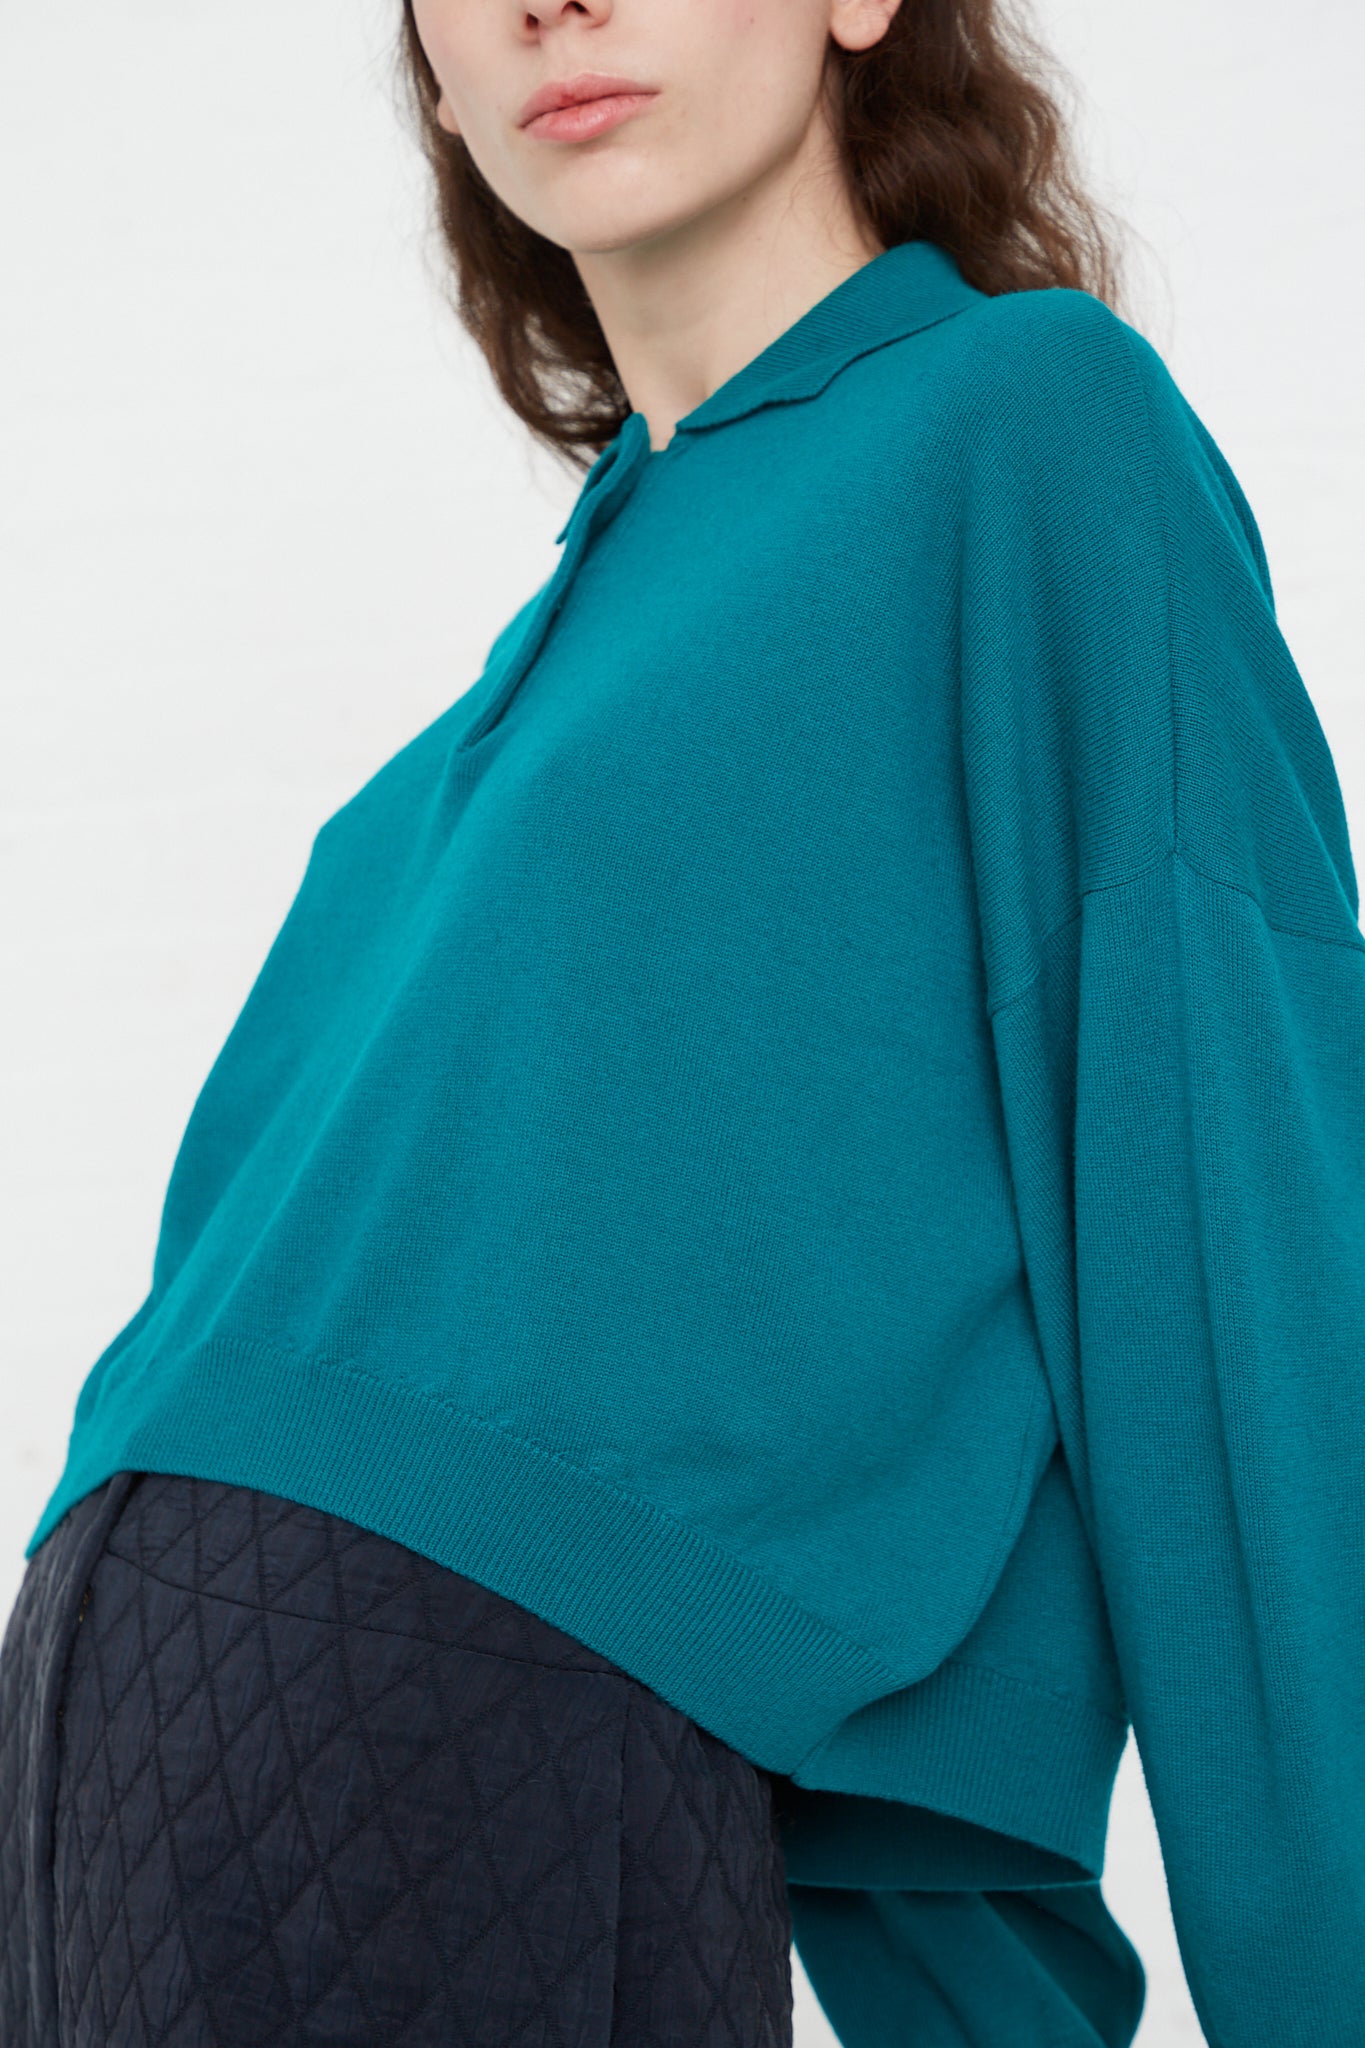 A model wearing a Cordera Merino Wool Polo Sweater in Teal Green made in Spain.